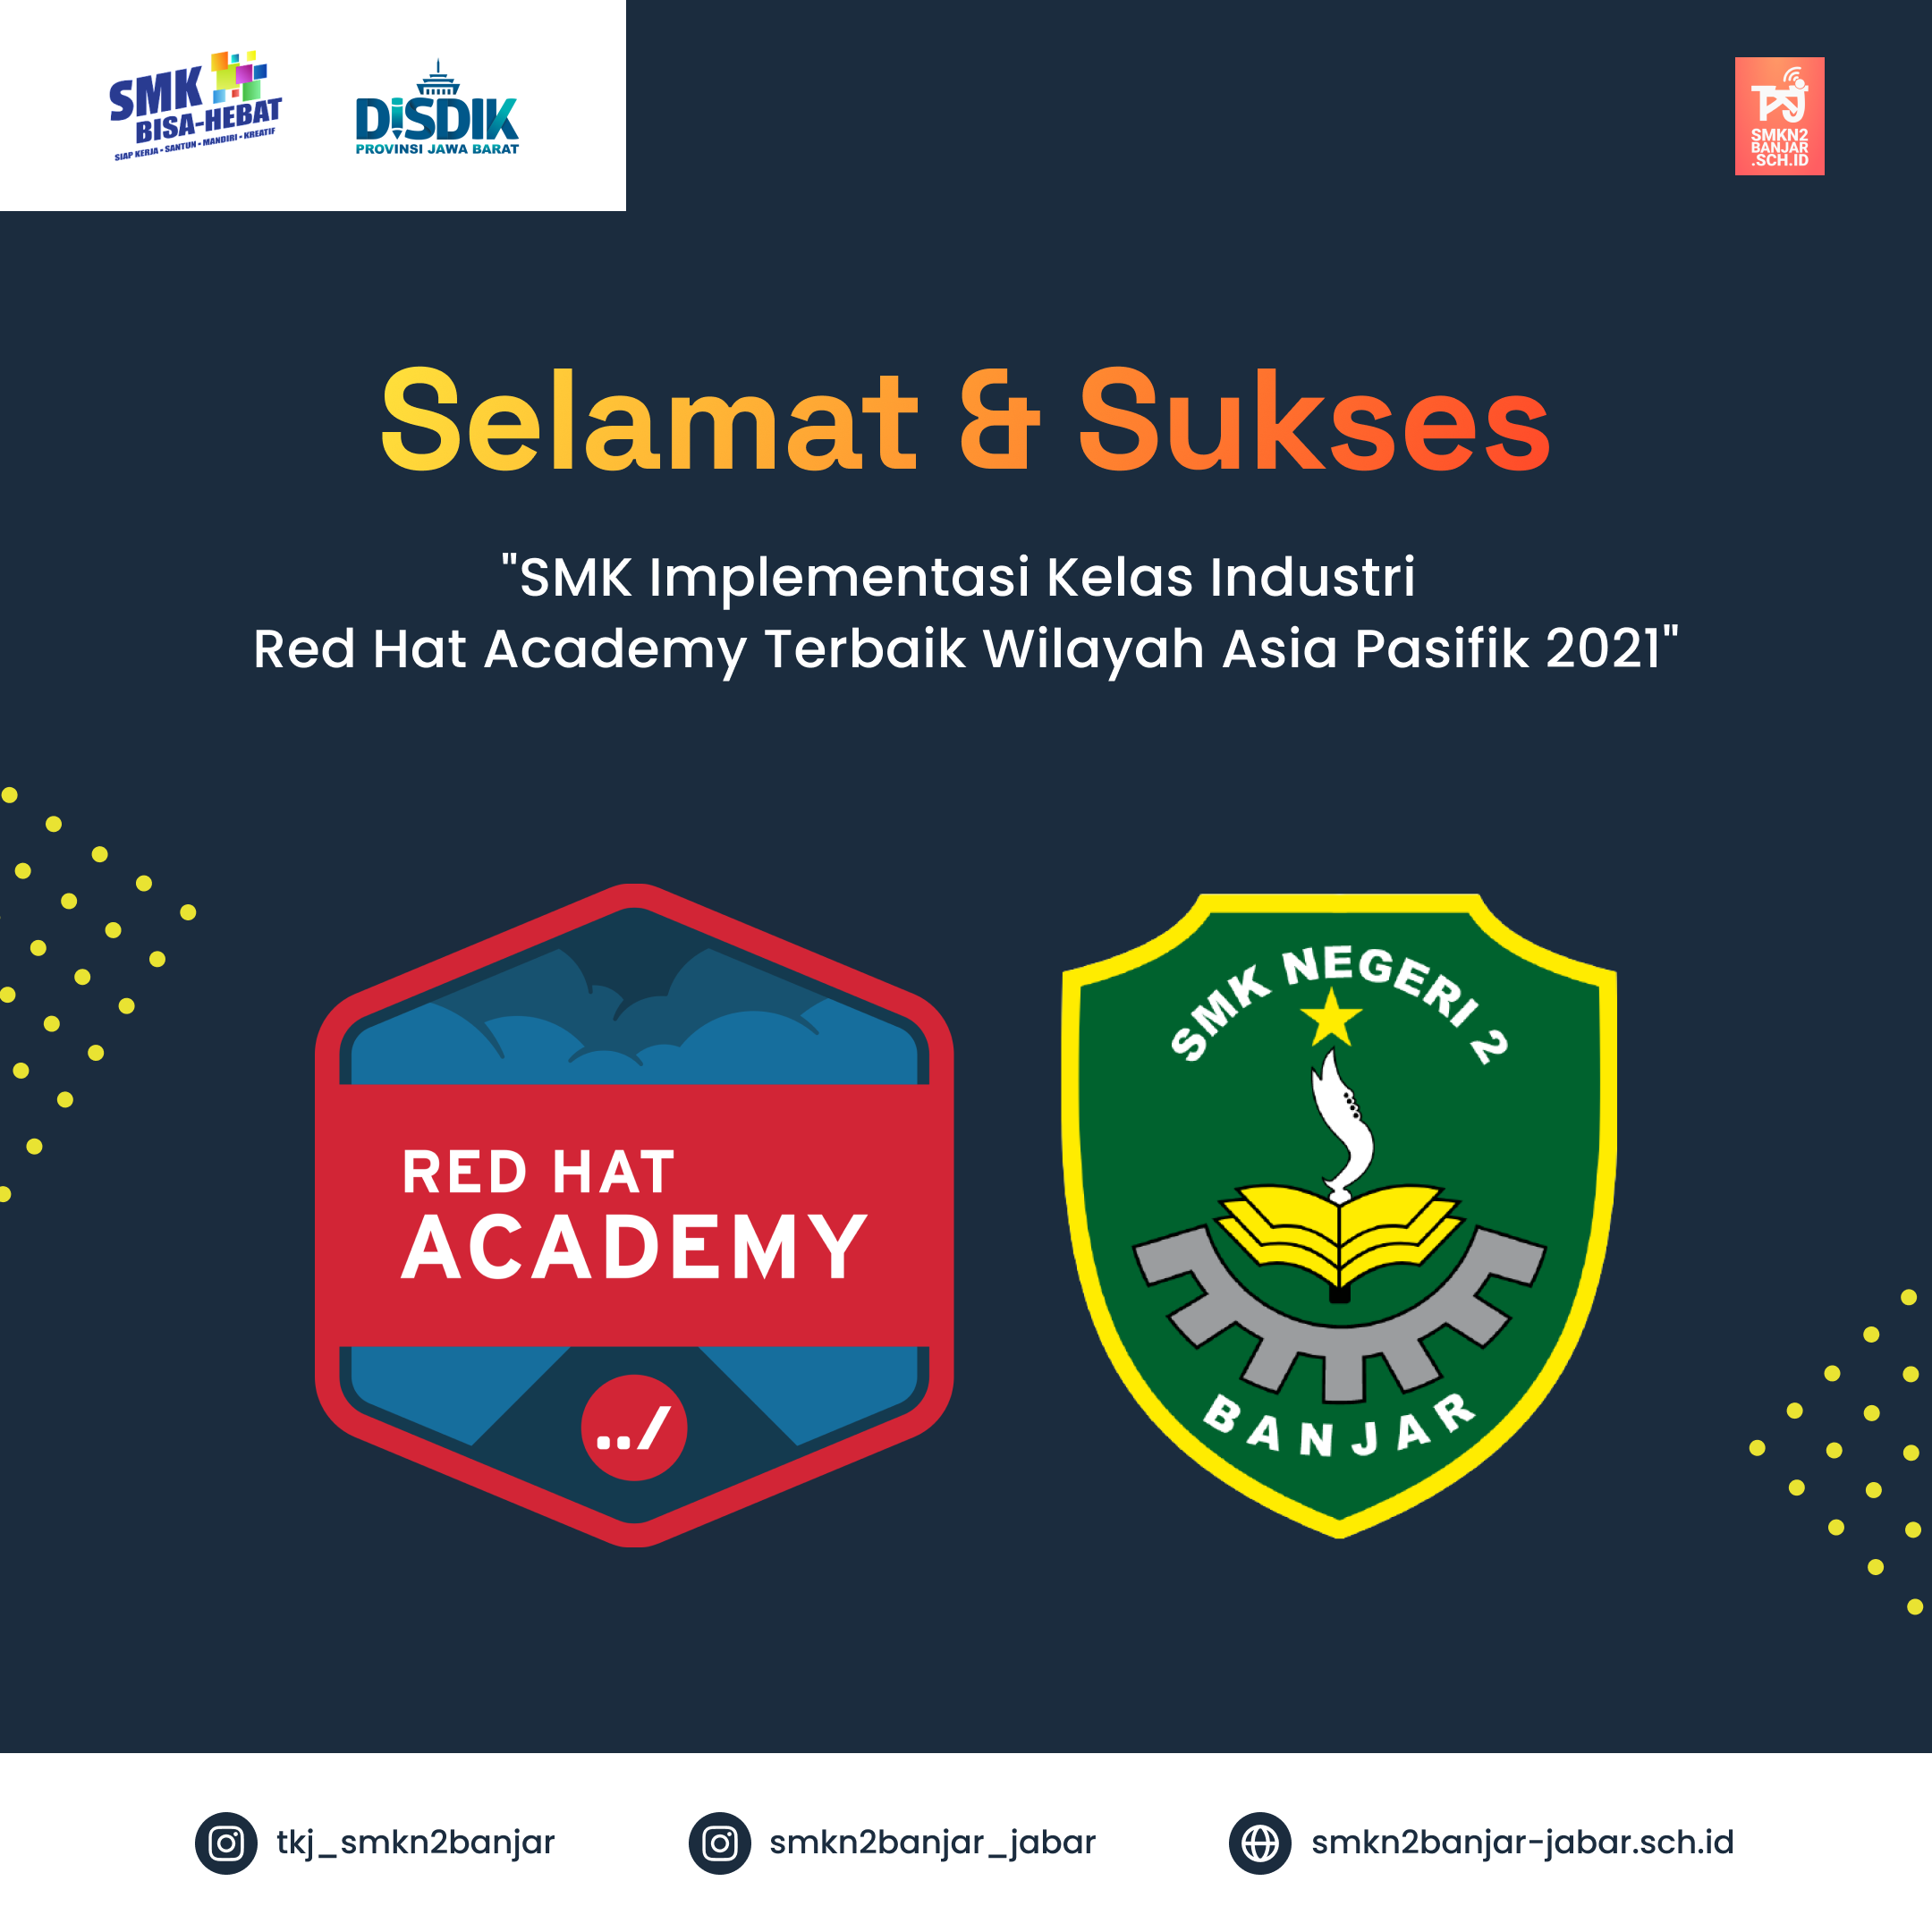 SMK Implementasi Kelas Industri Red Hat Academy Terbaik Wilayah Asia Pasifik 2021